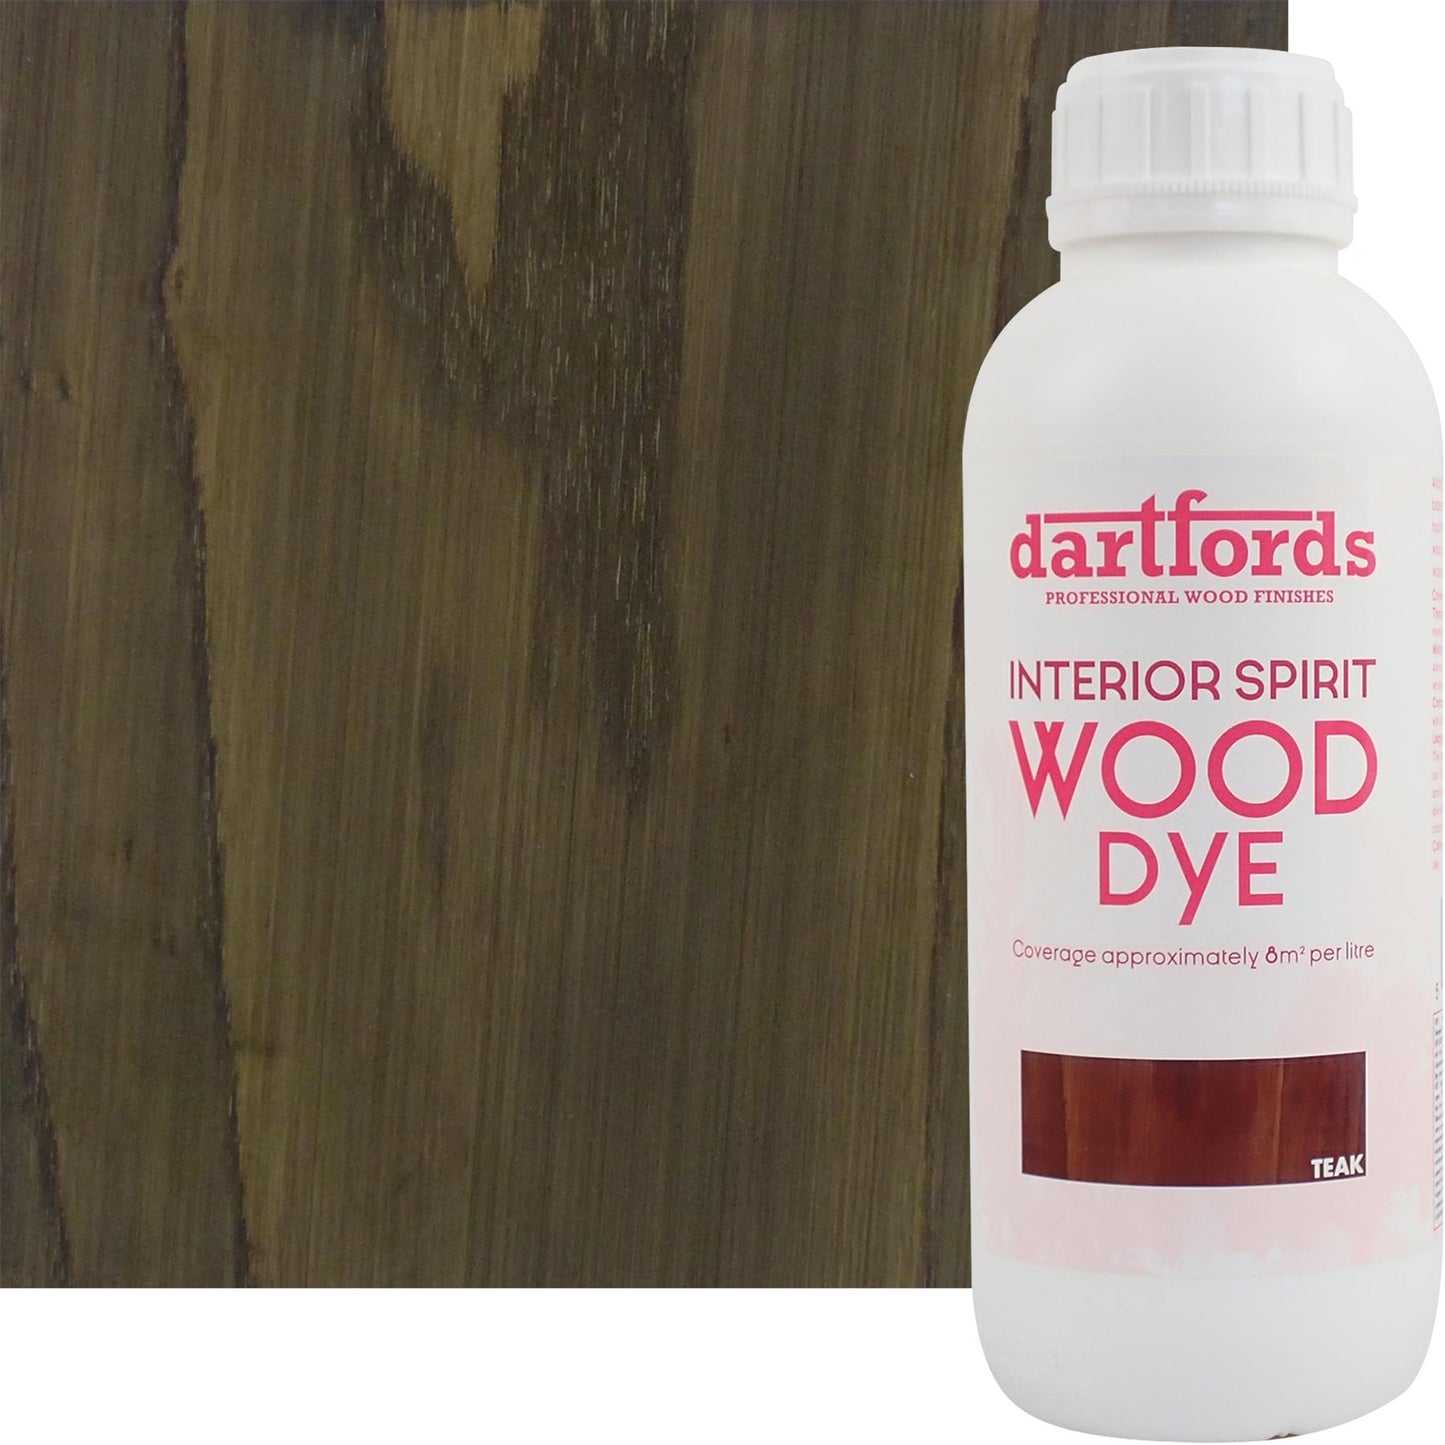 dartfords Teak Interior Spirit Based Wood Dye - 1 litre Tin